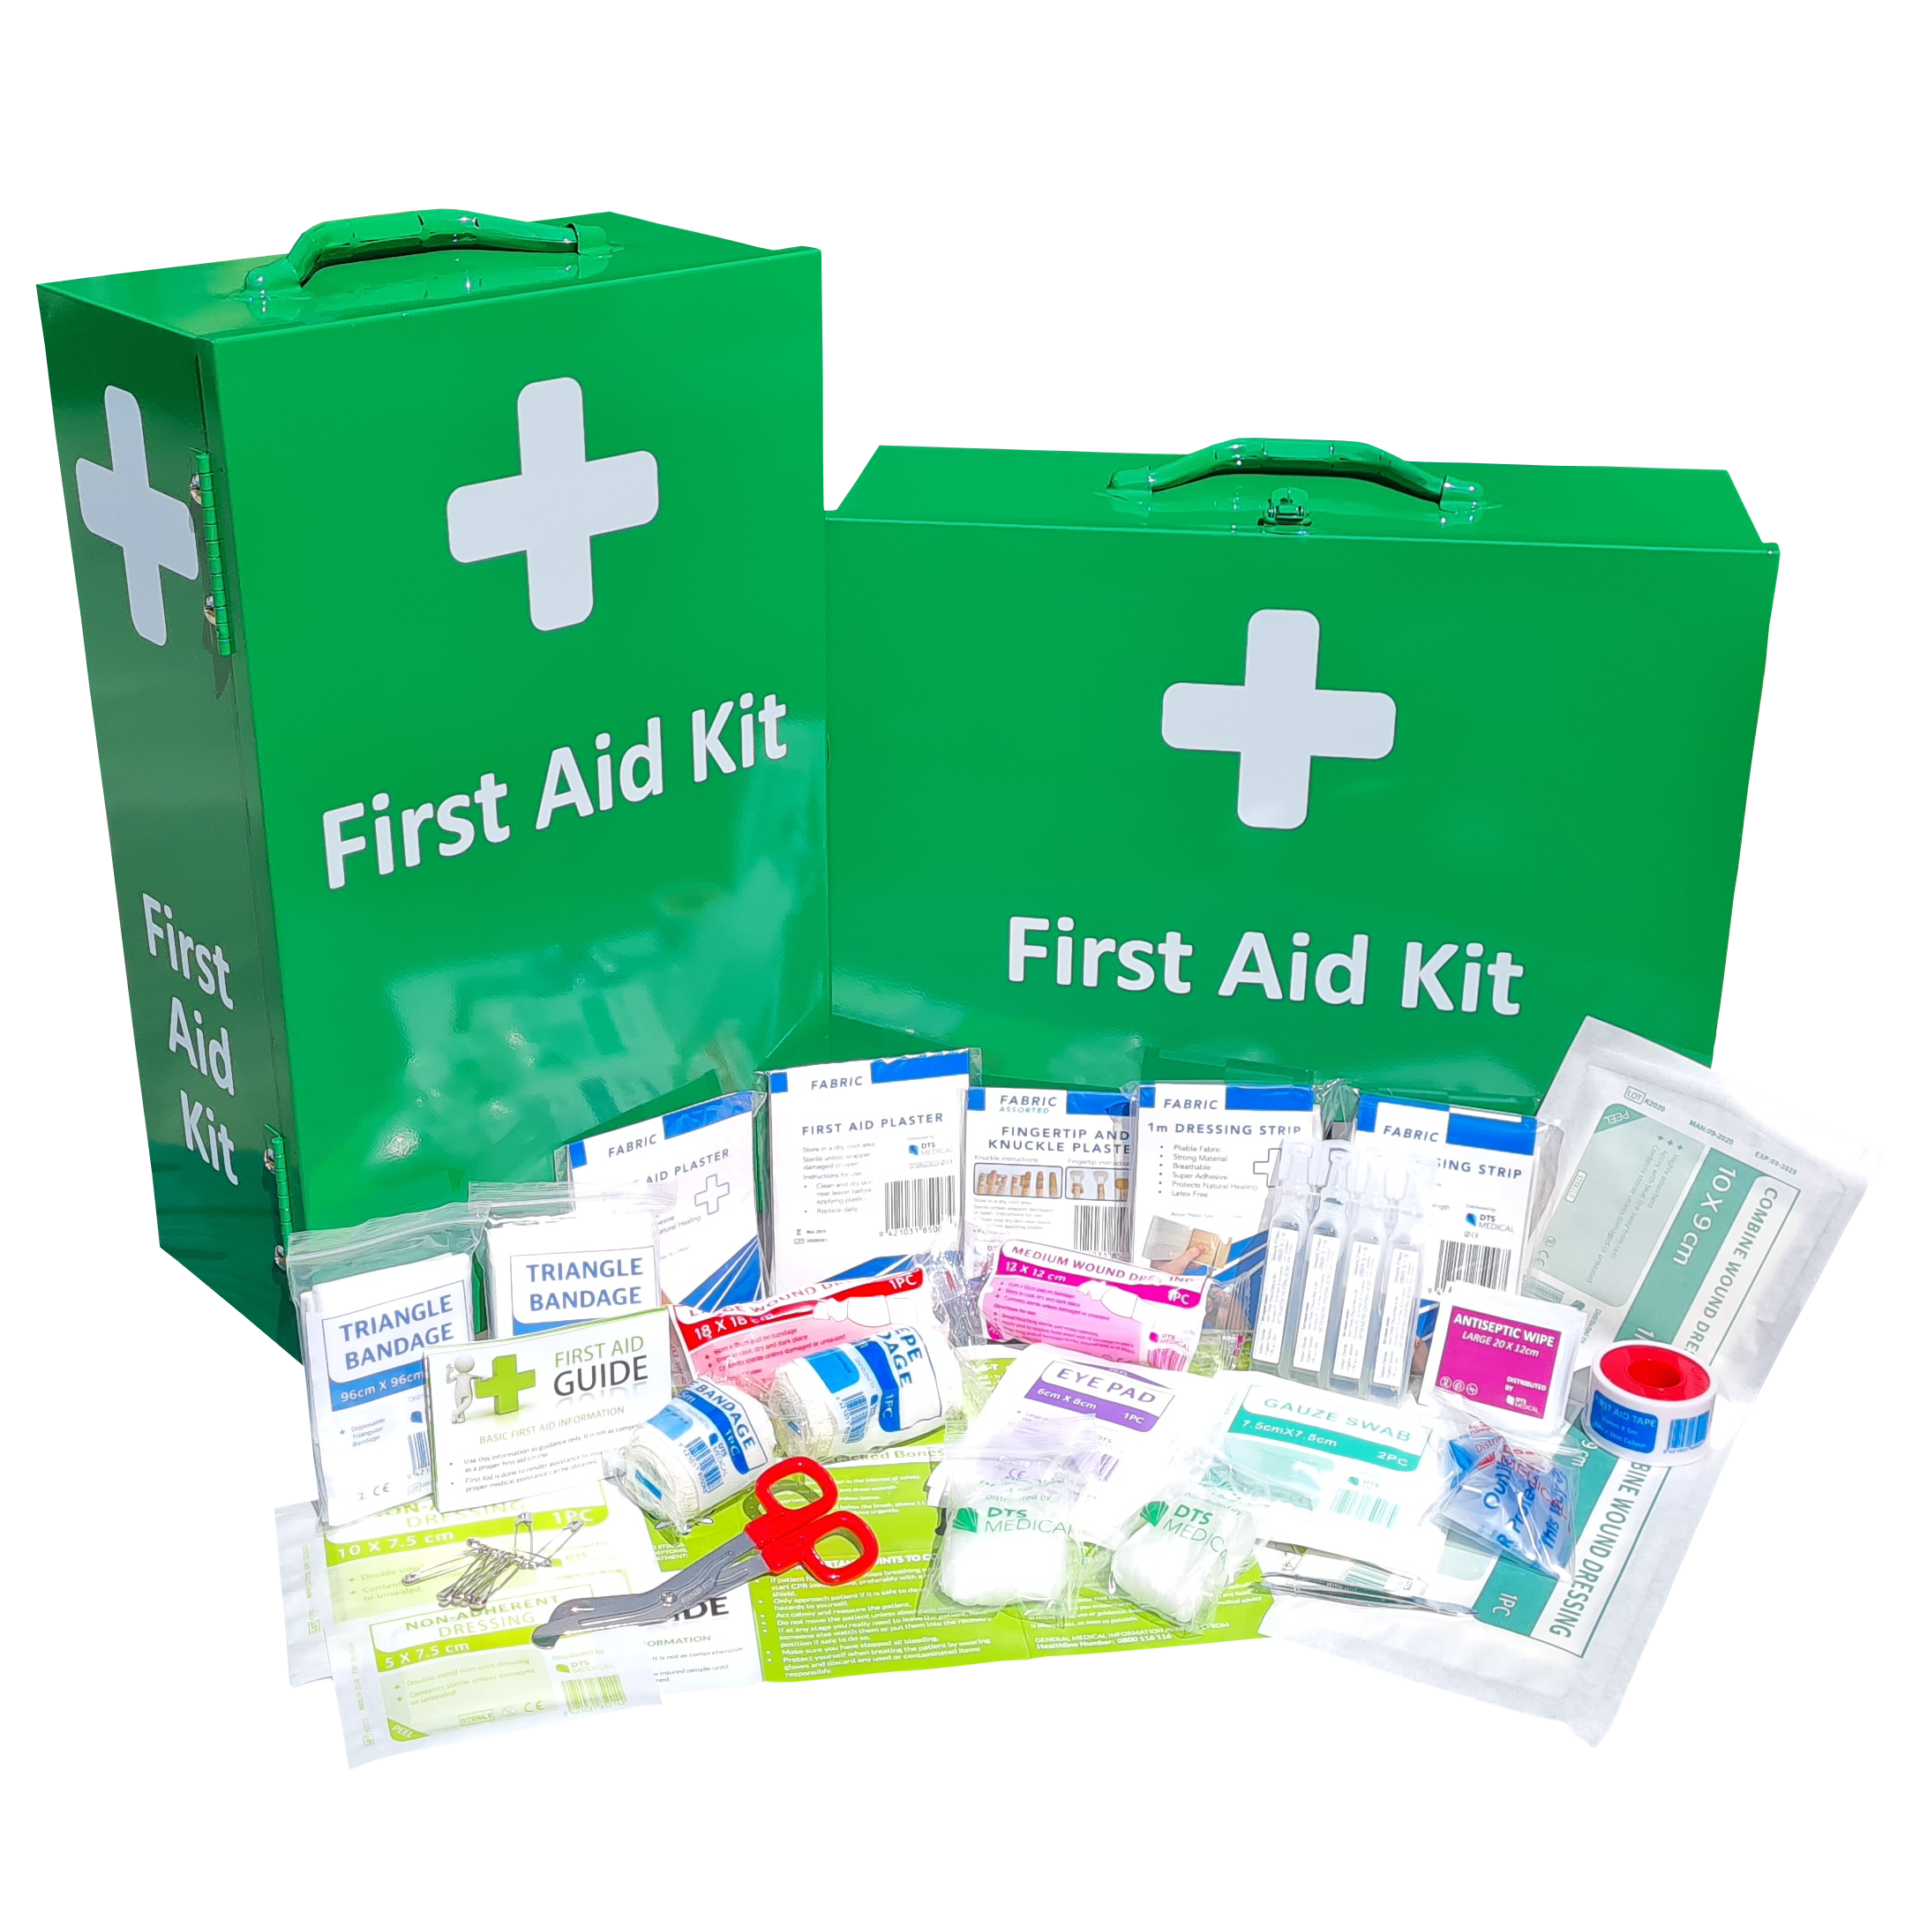 metal first aid box